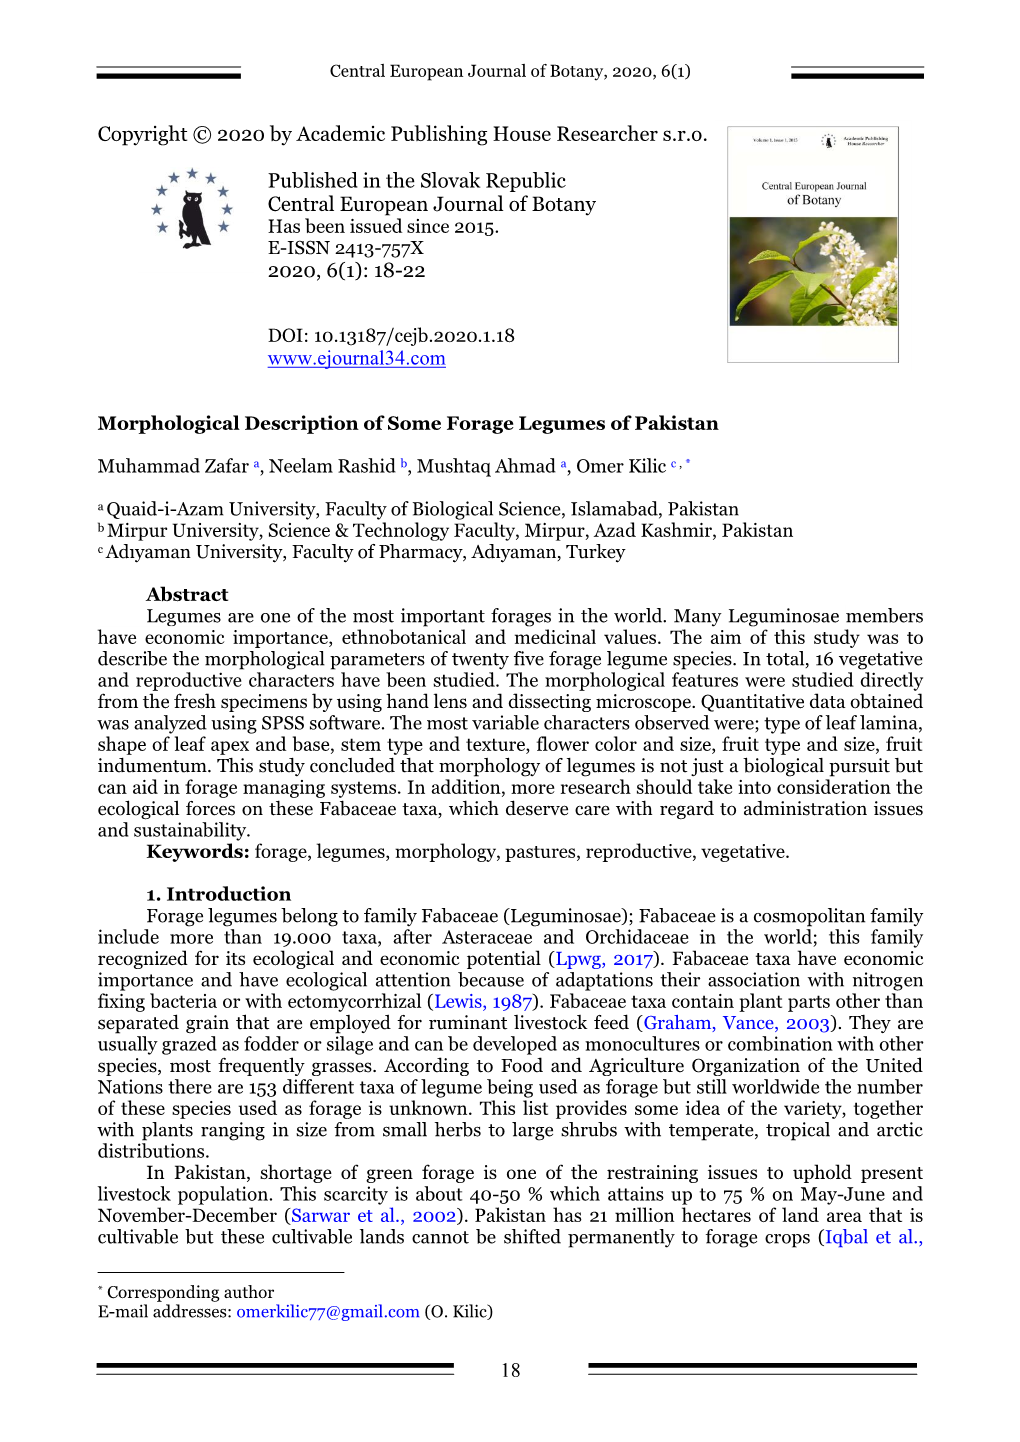 Morphological Description of Some Forage Legumes of Pakistan